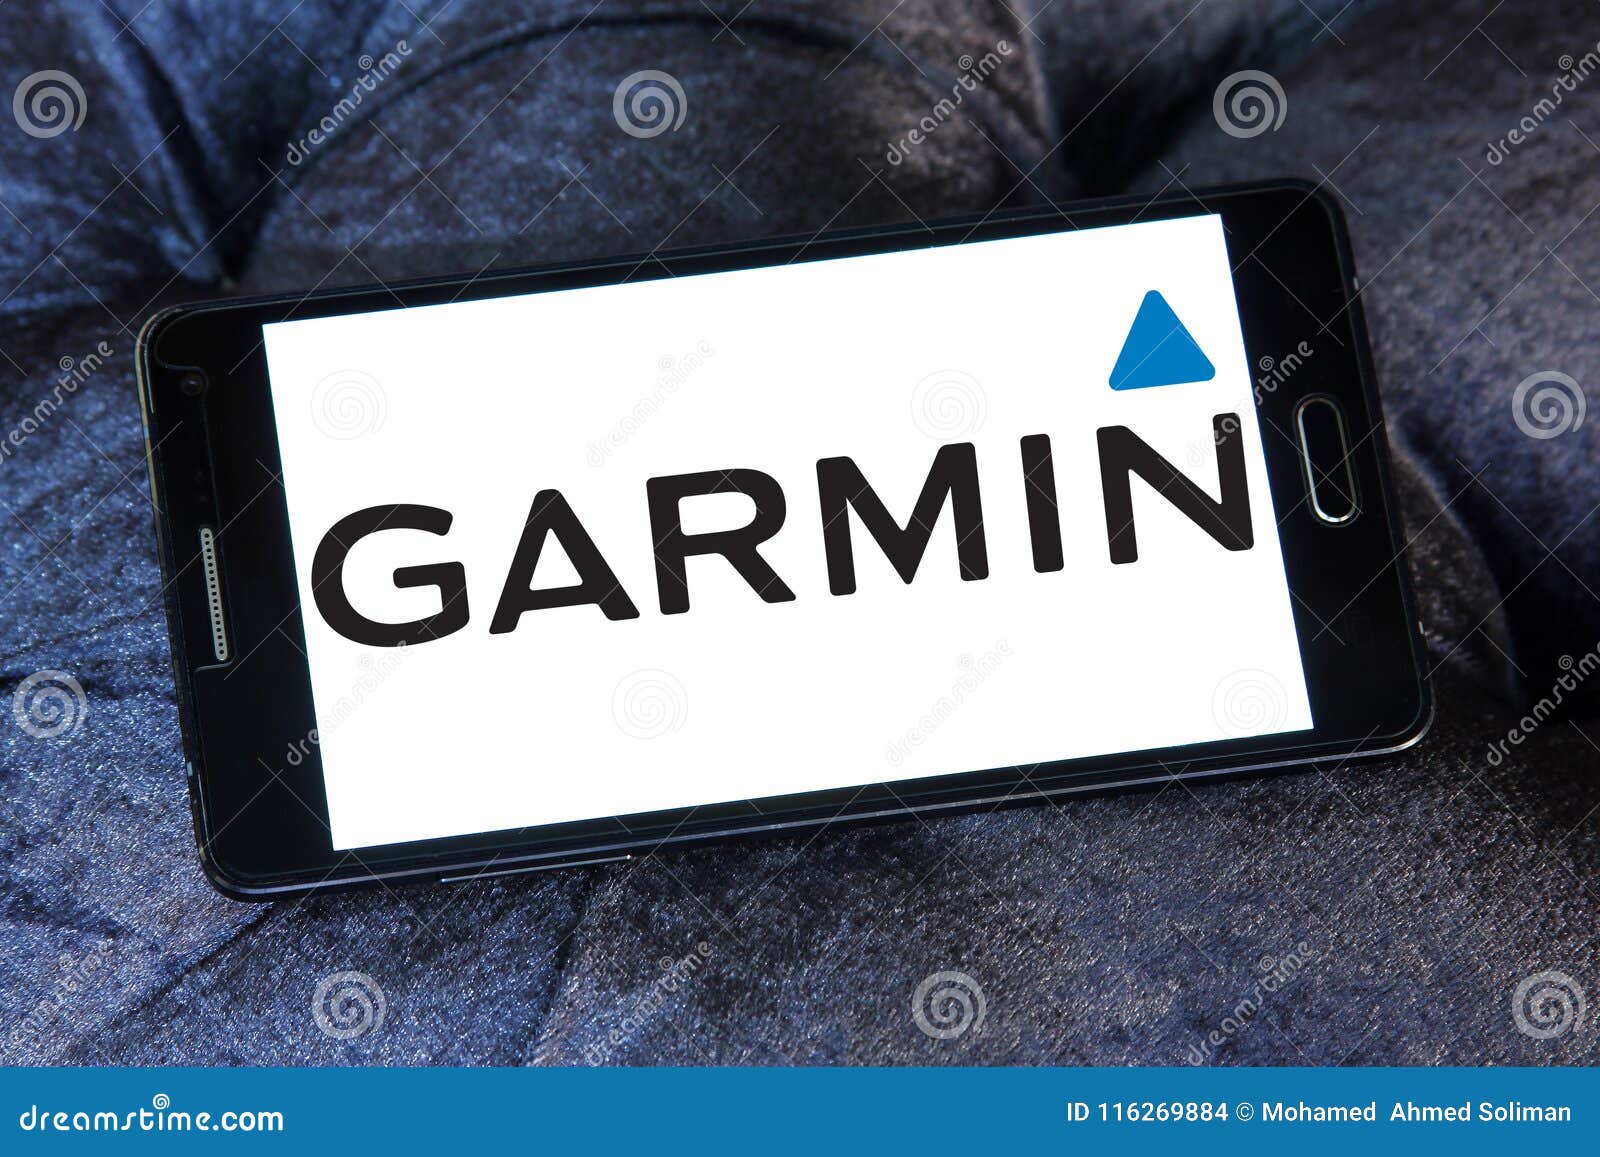 Garmin Technology Company Logo Editorial Stock Image - Image of icons,  activities: 116269884